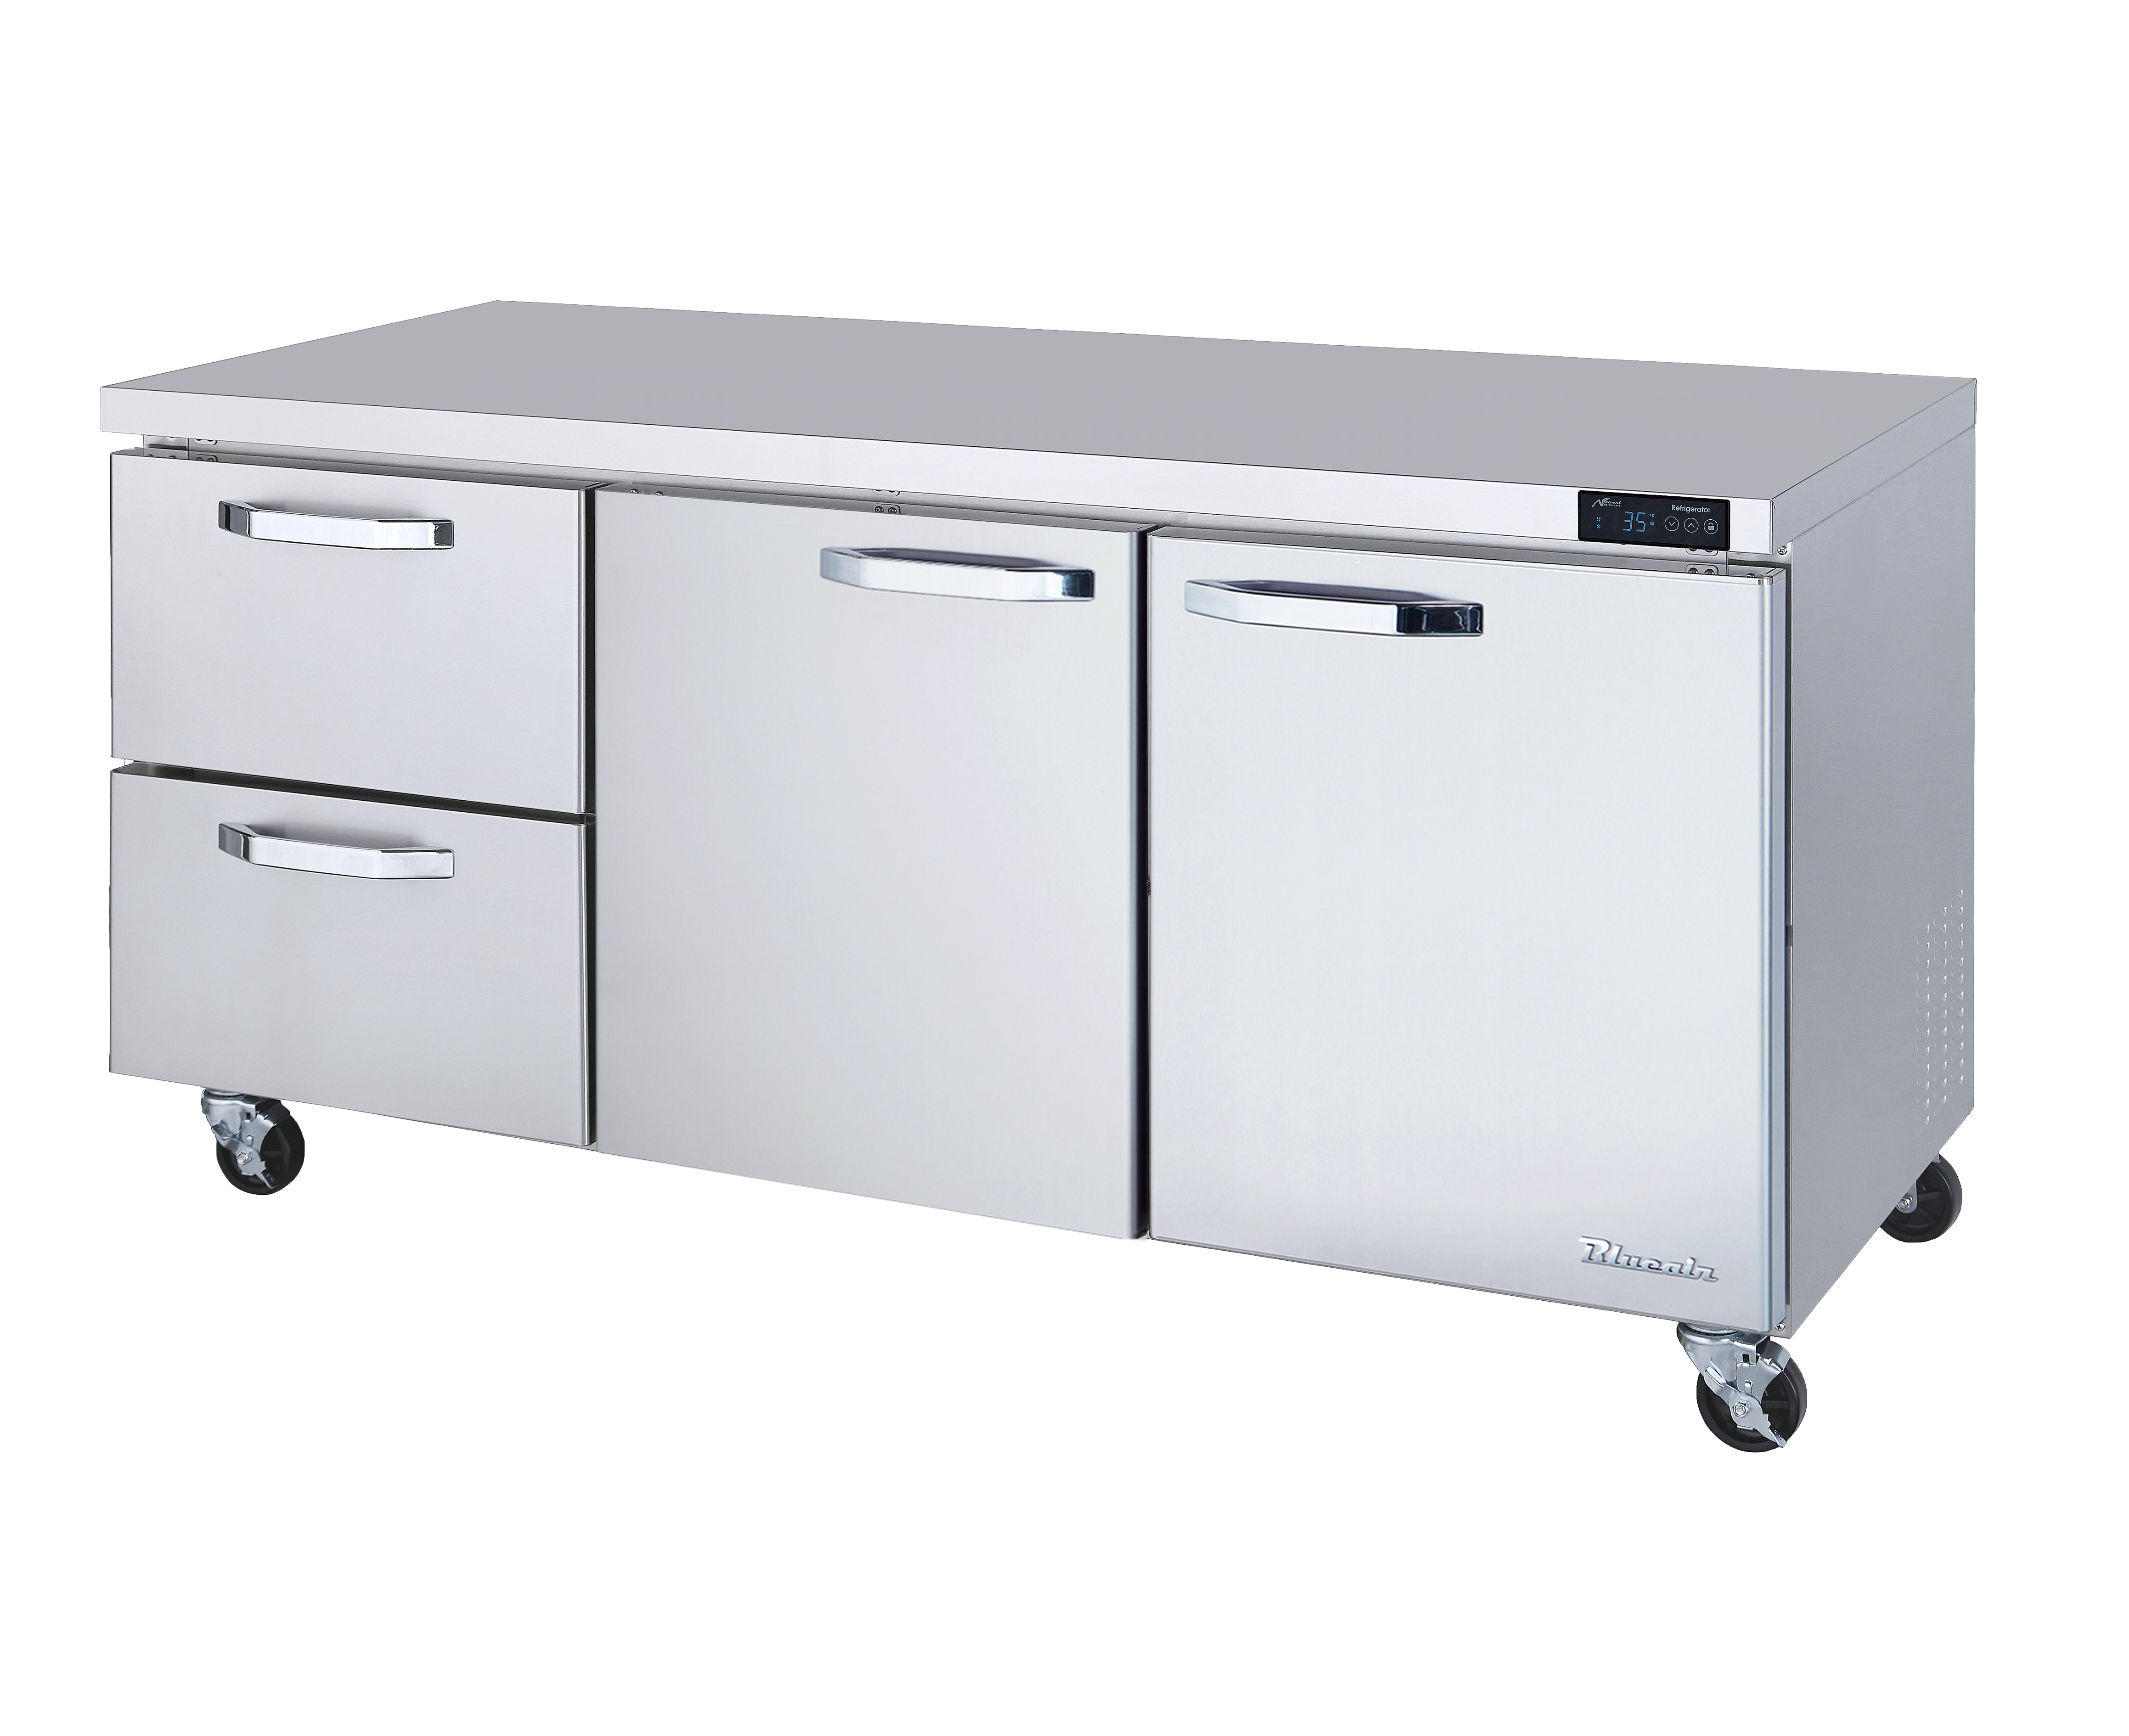 Blue Air - BLUR72-D2L-HC, 2 Drawers 2 Doors (M, R) All Stainless Undercounter Refrigerator - 72" wide, 20 cu/ft, R-290 Refrigerant